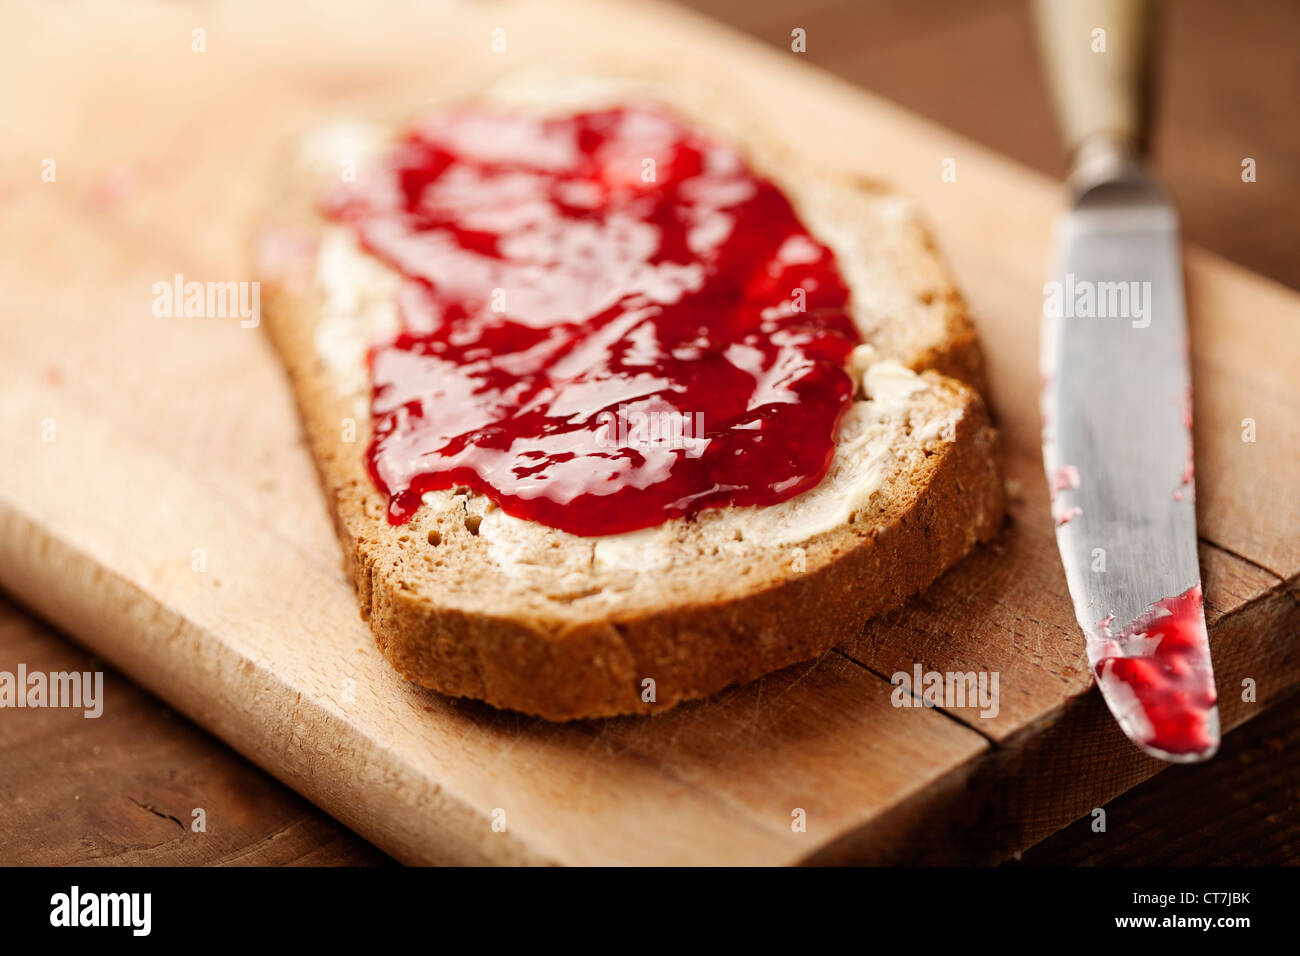 jam on bread Stock Photo